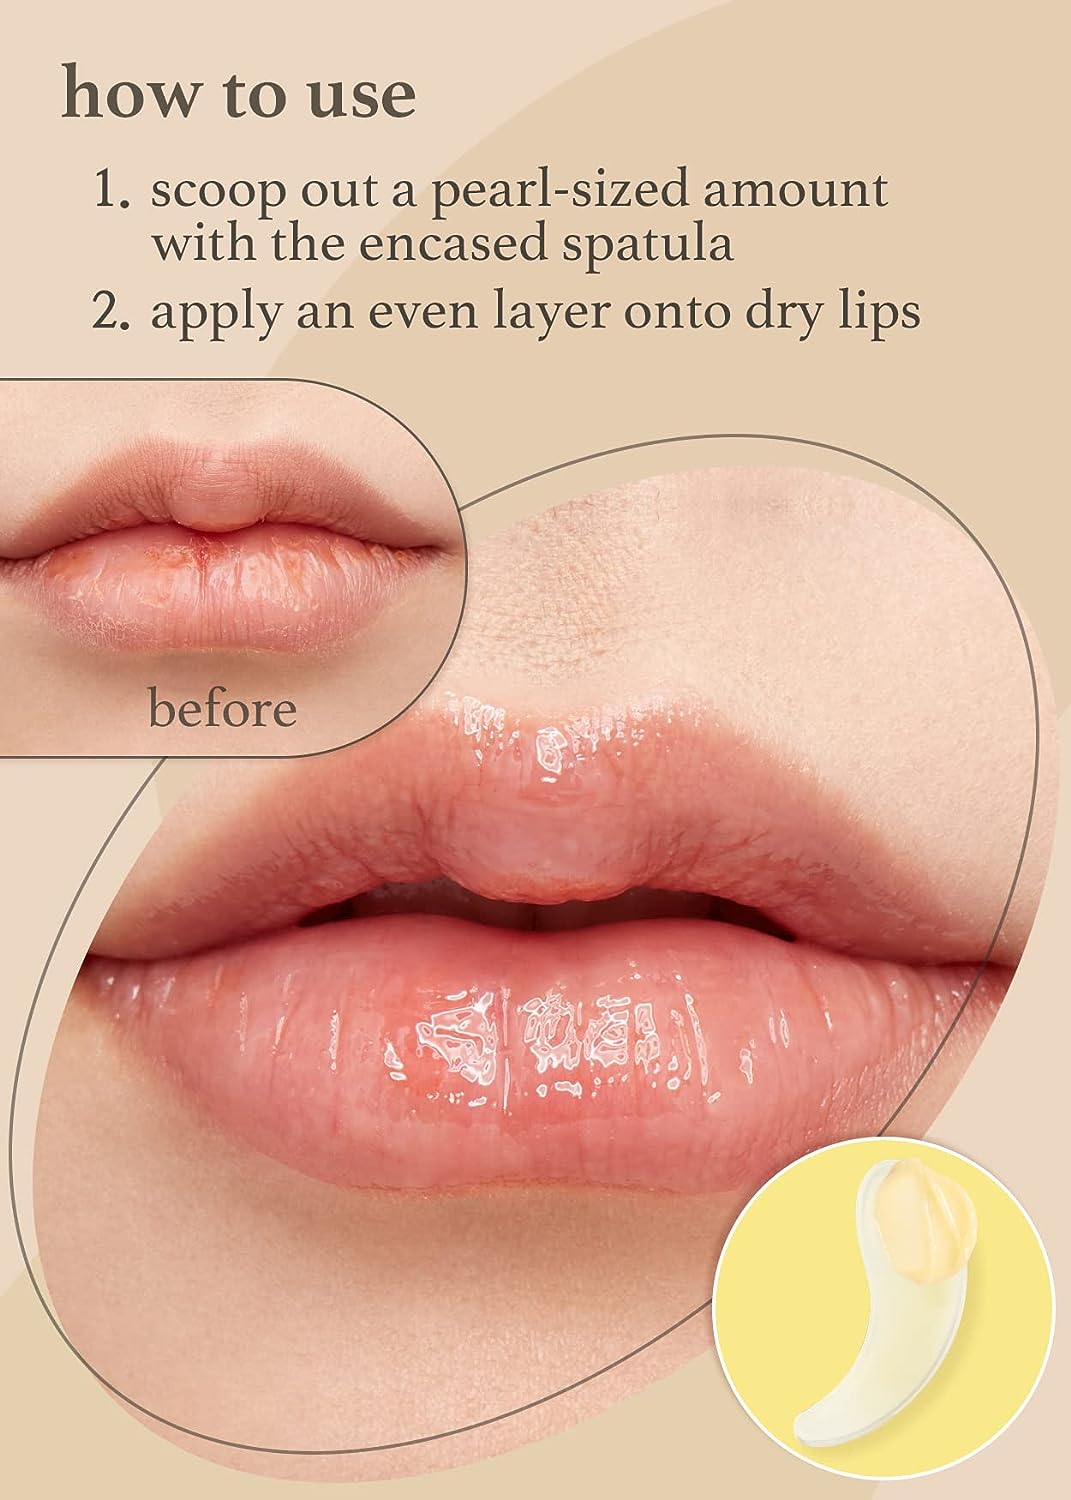 applebutter lip mask with appleclear lip oil set